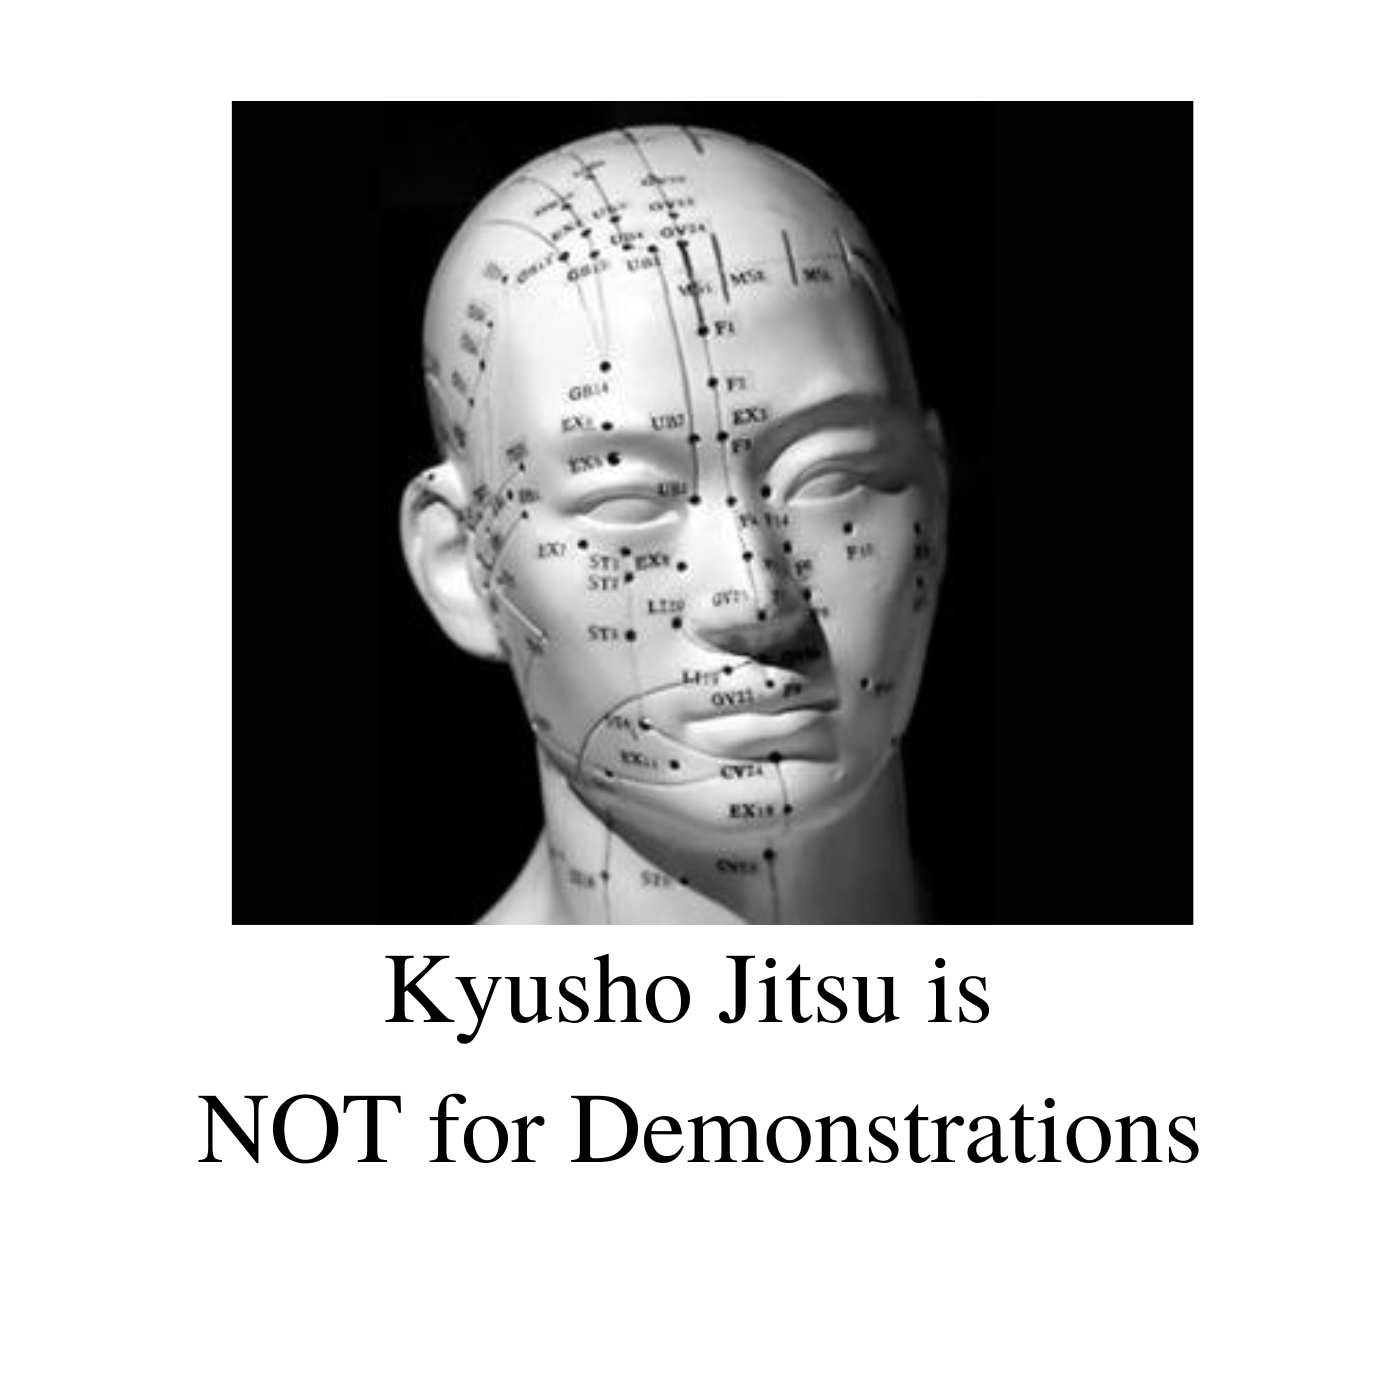 Kyusho Jitsu is NOT for Demonstrations